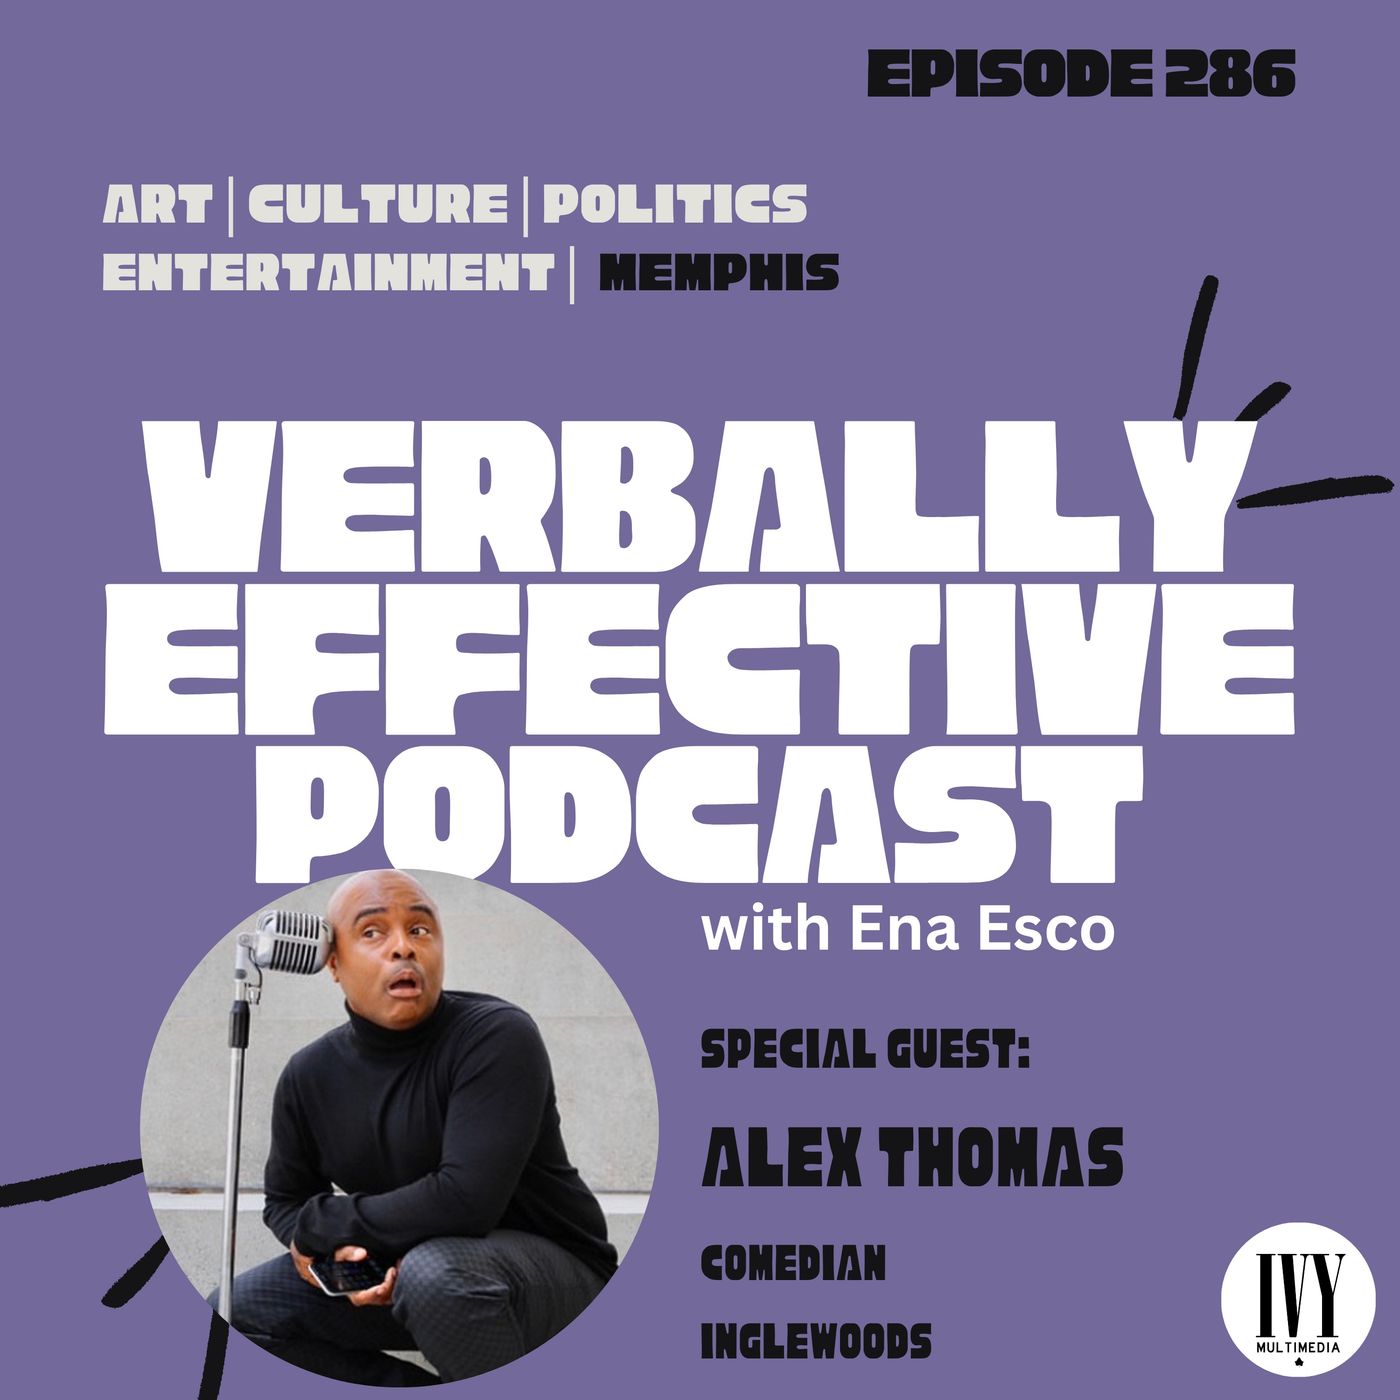 Comedian Alex Thomas "INGLEWOODS" | Episode 286